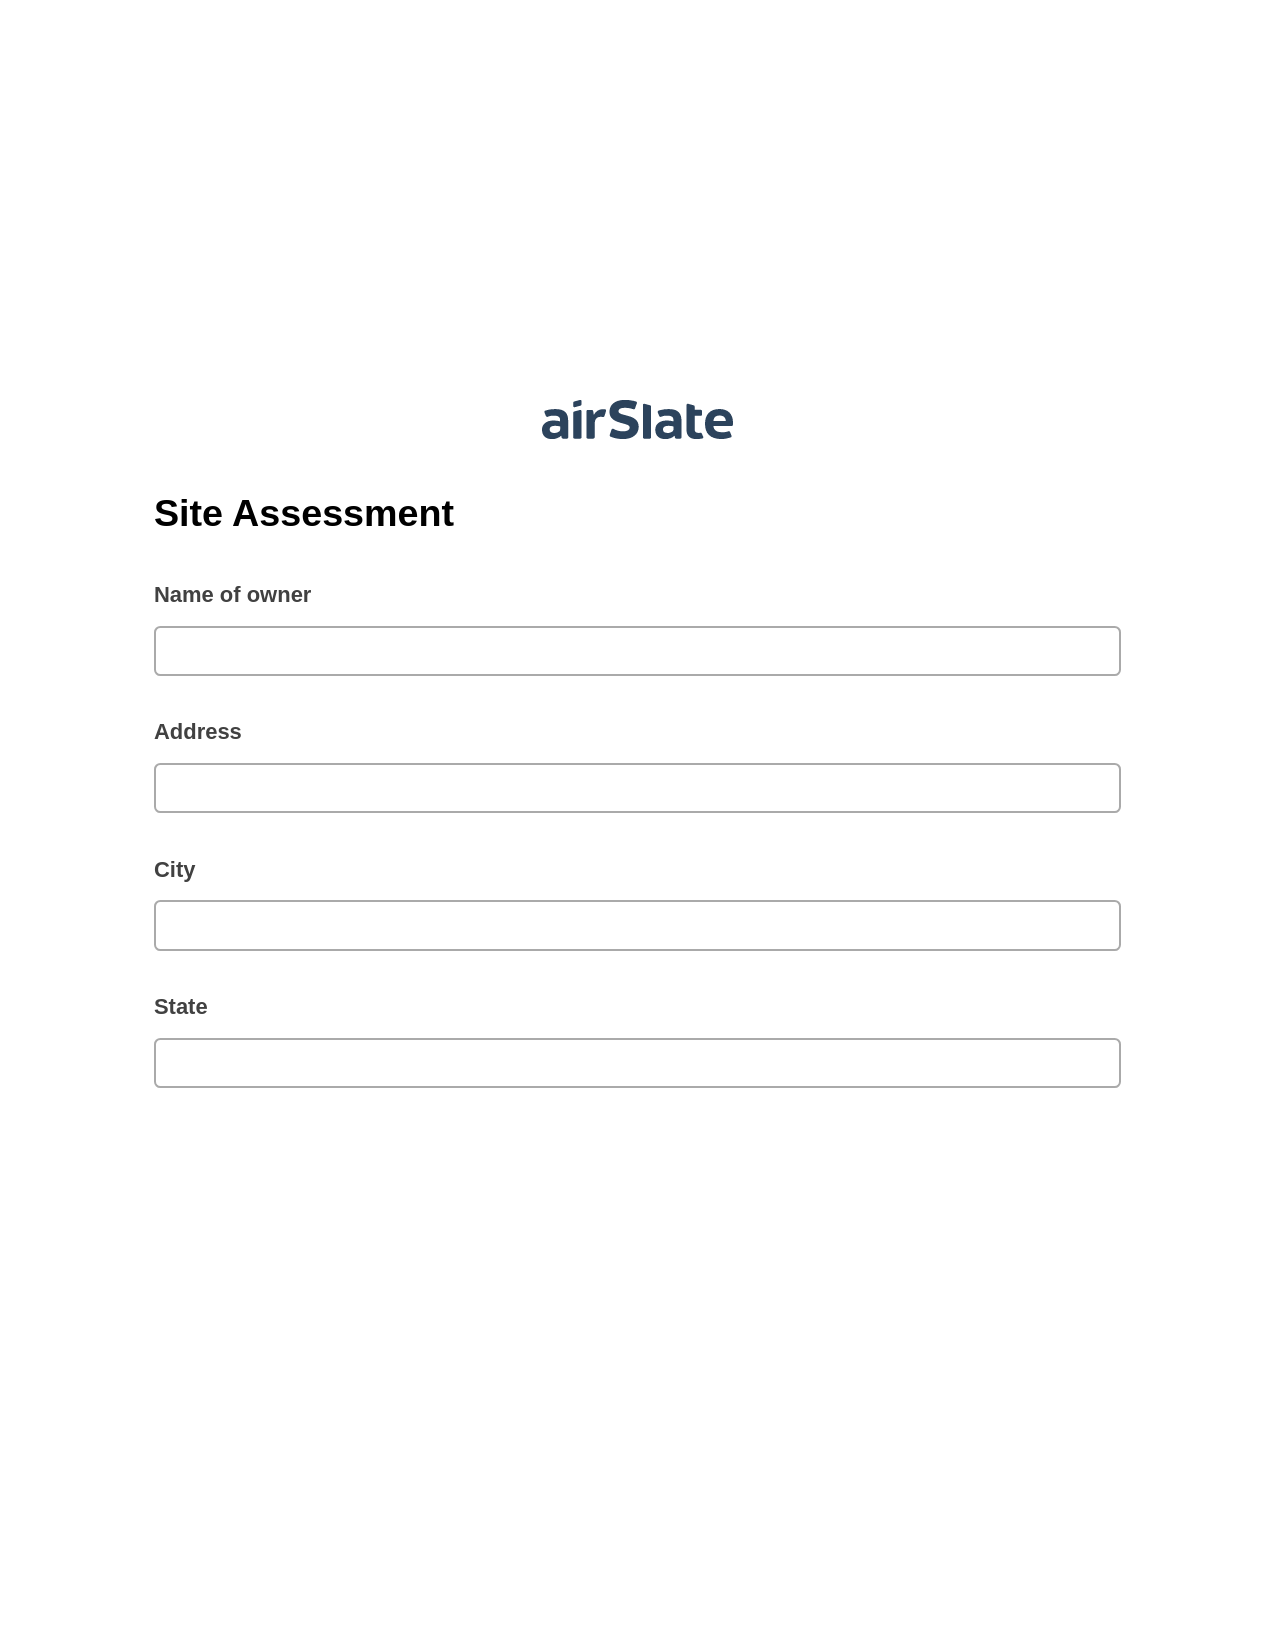 Site Assessment Pre-fill from Google Sheet Dropdown Options Bot, Invoke Salesforce Process Bot, OneDrive Bot